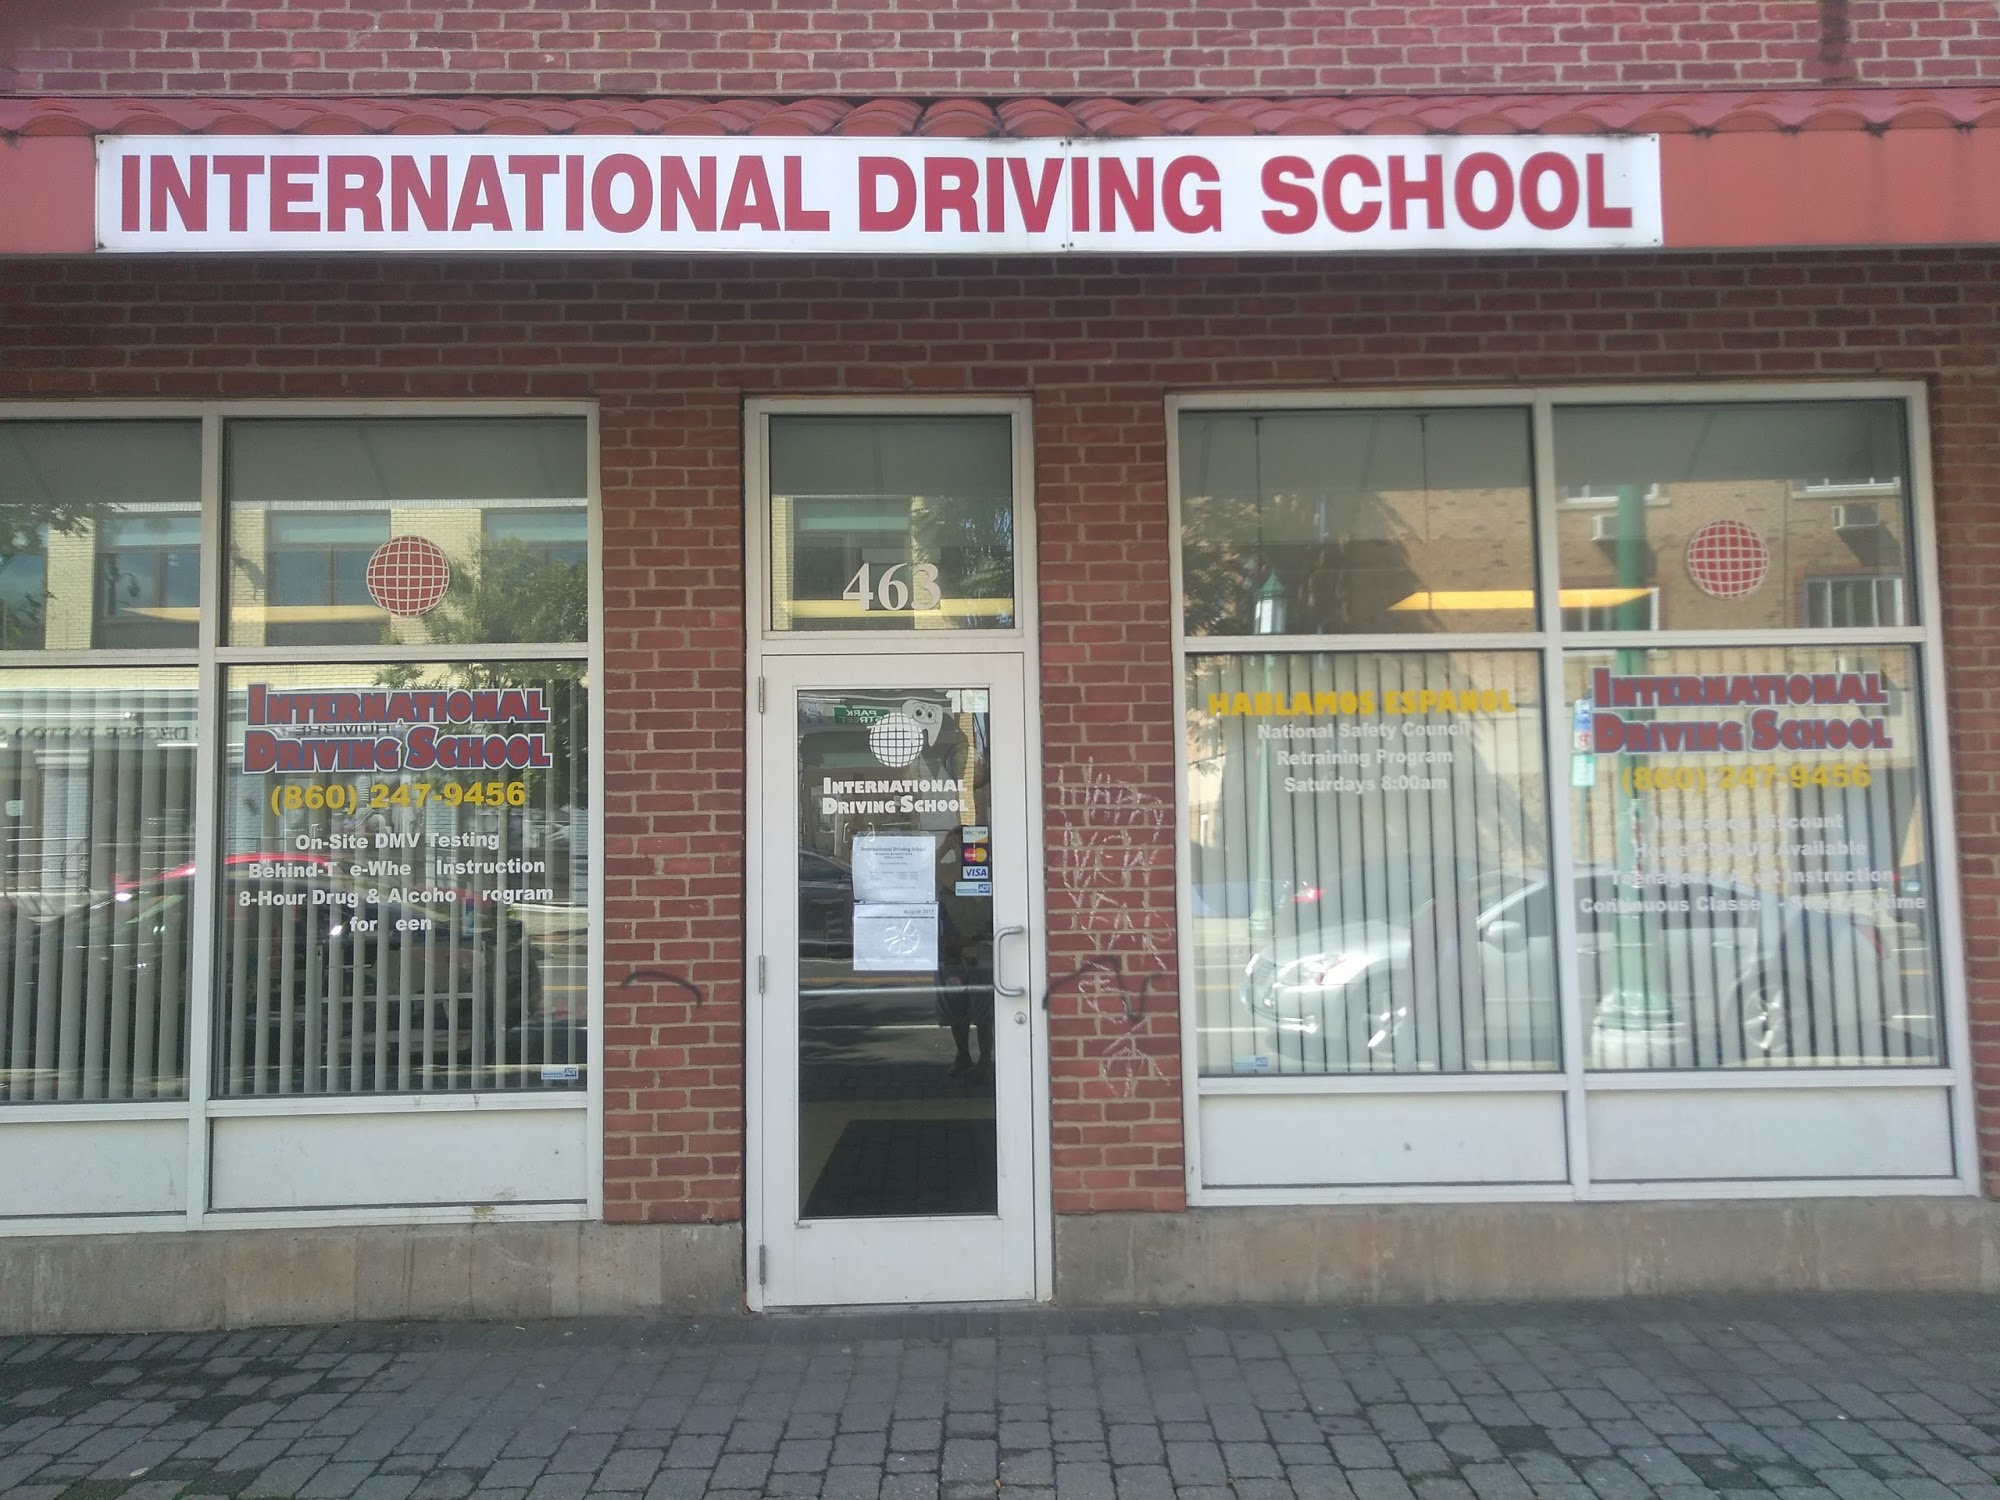 International Driving School